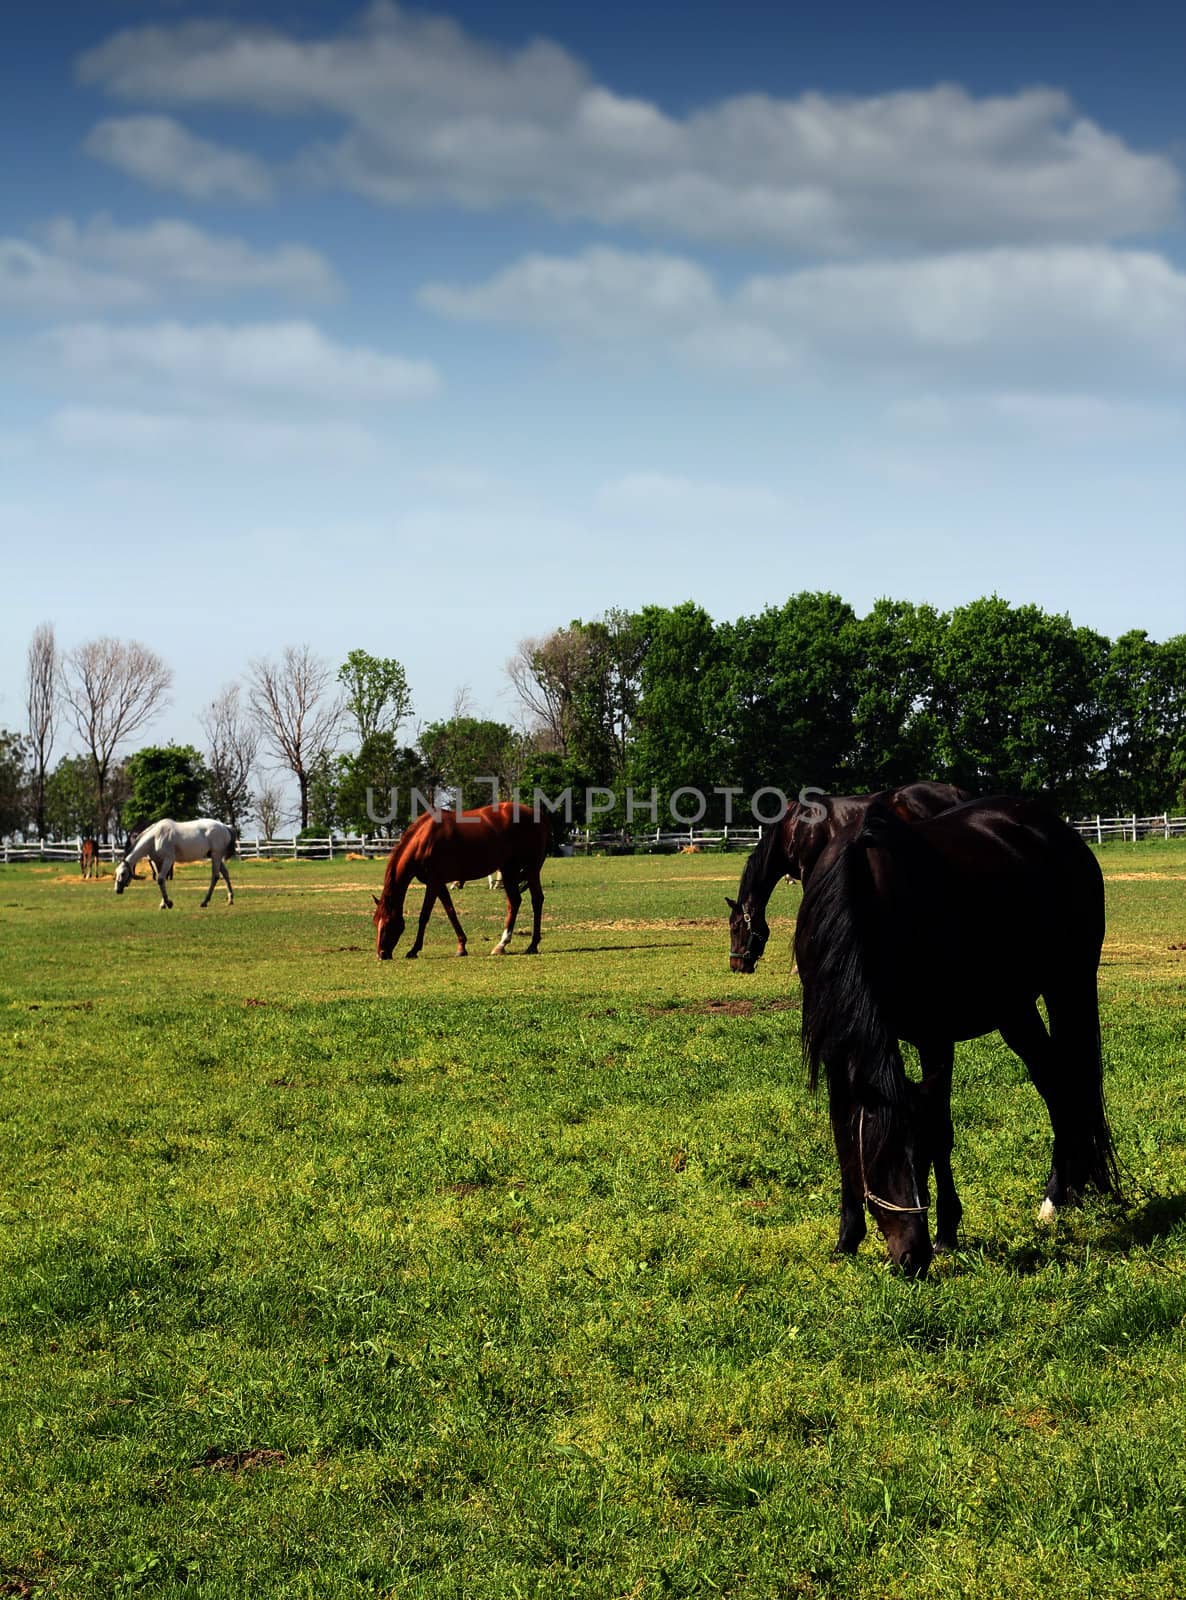 herd of horses ranch scene by goce